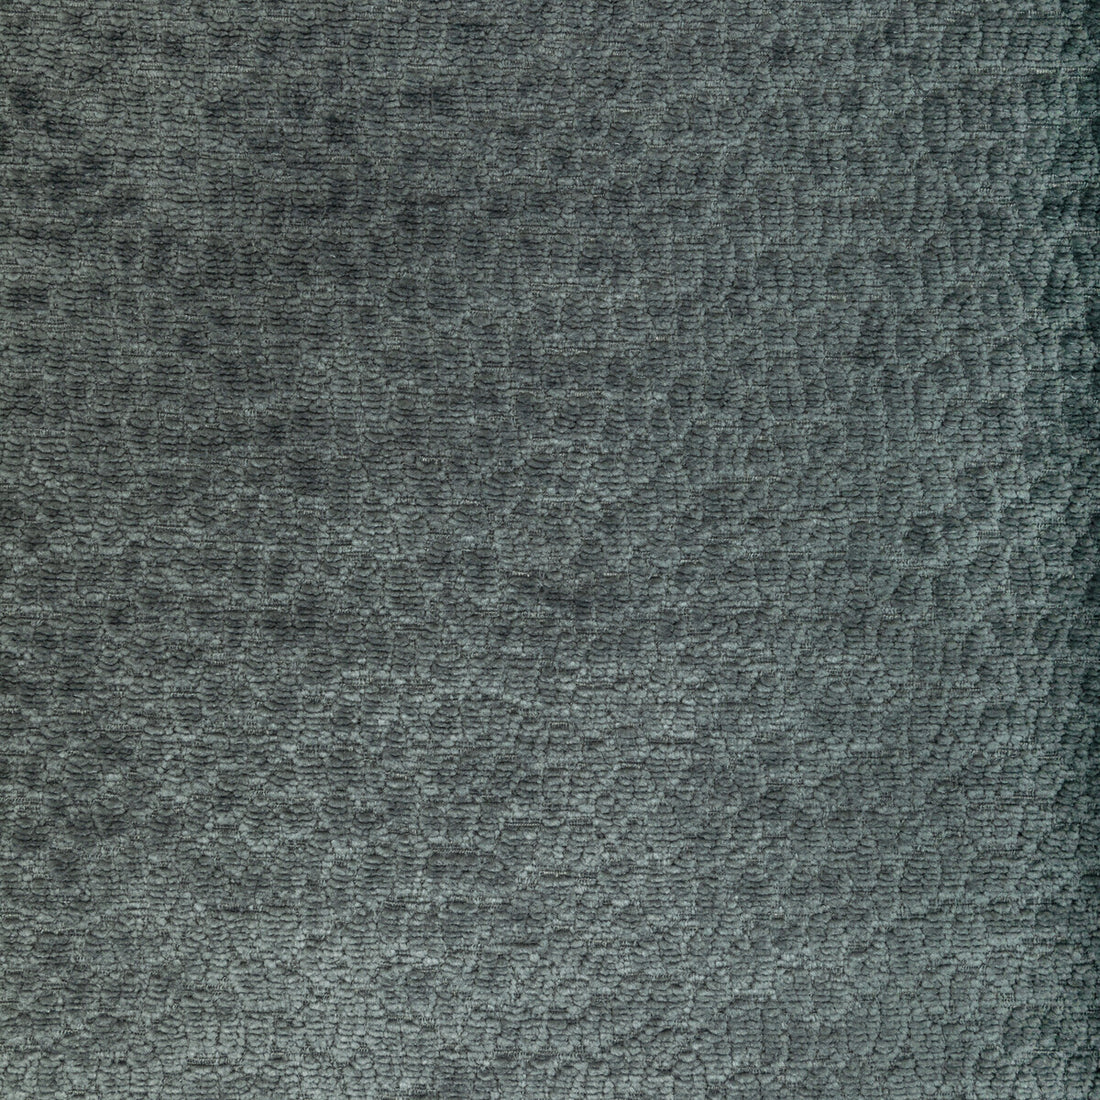 Kravet Smart fabric in 36606-511 color - pattern 36606.511.0 - by Kravet Smart in the Performance Kravetarmor collection